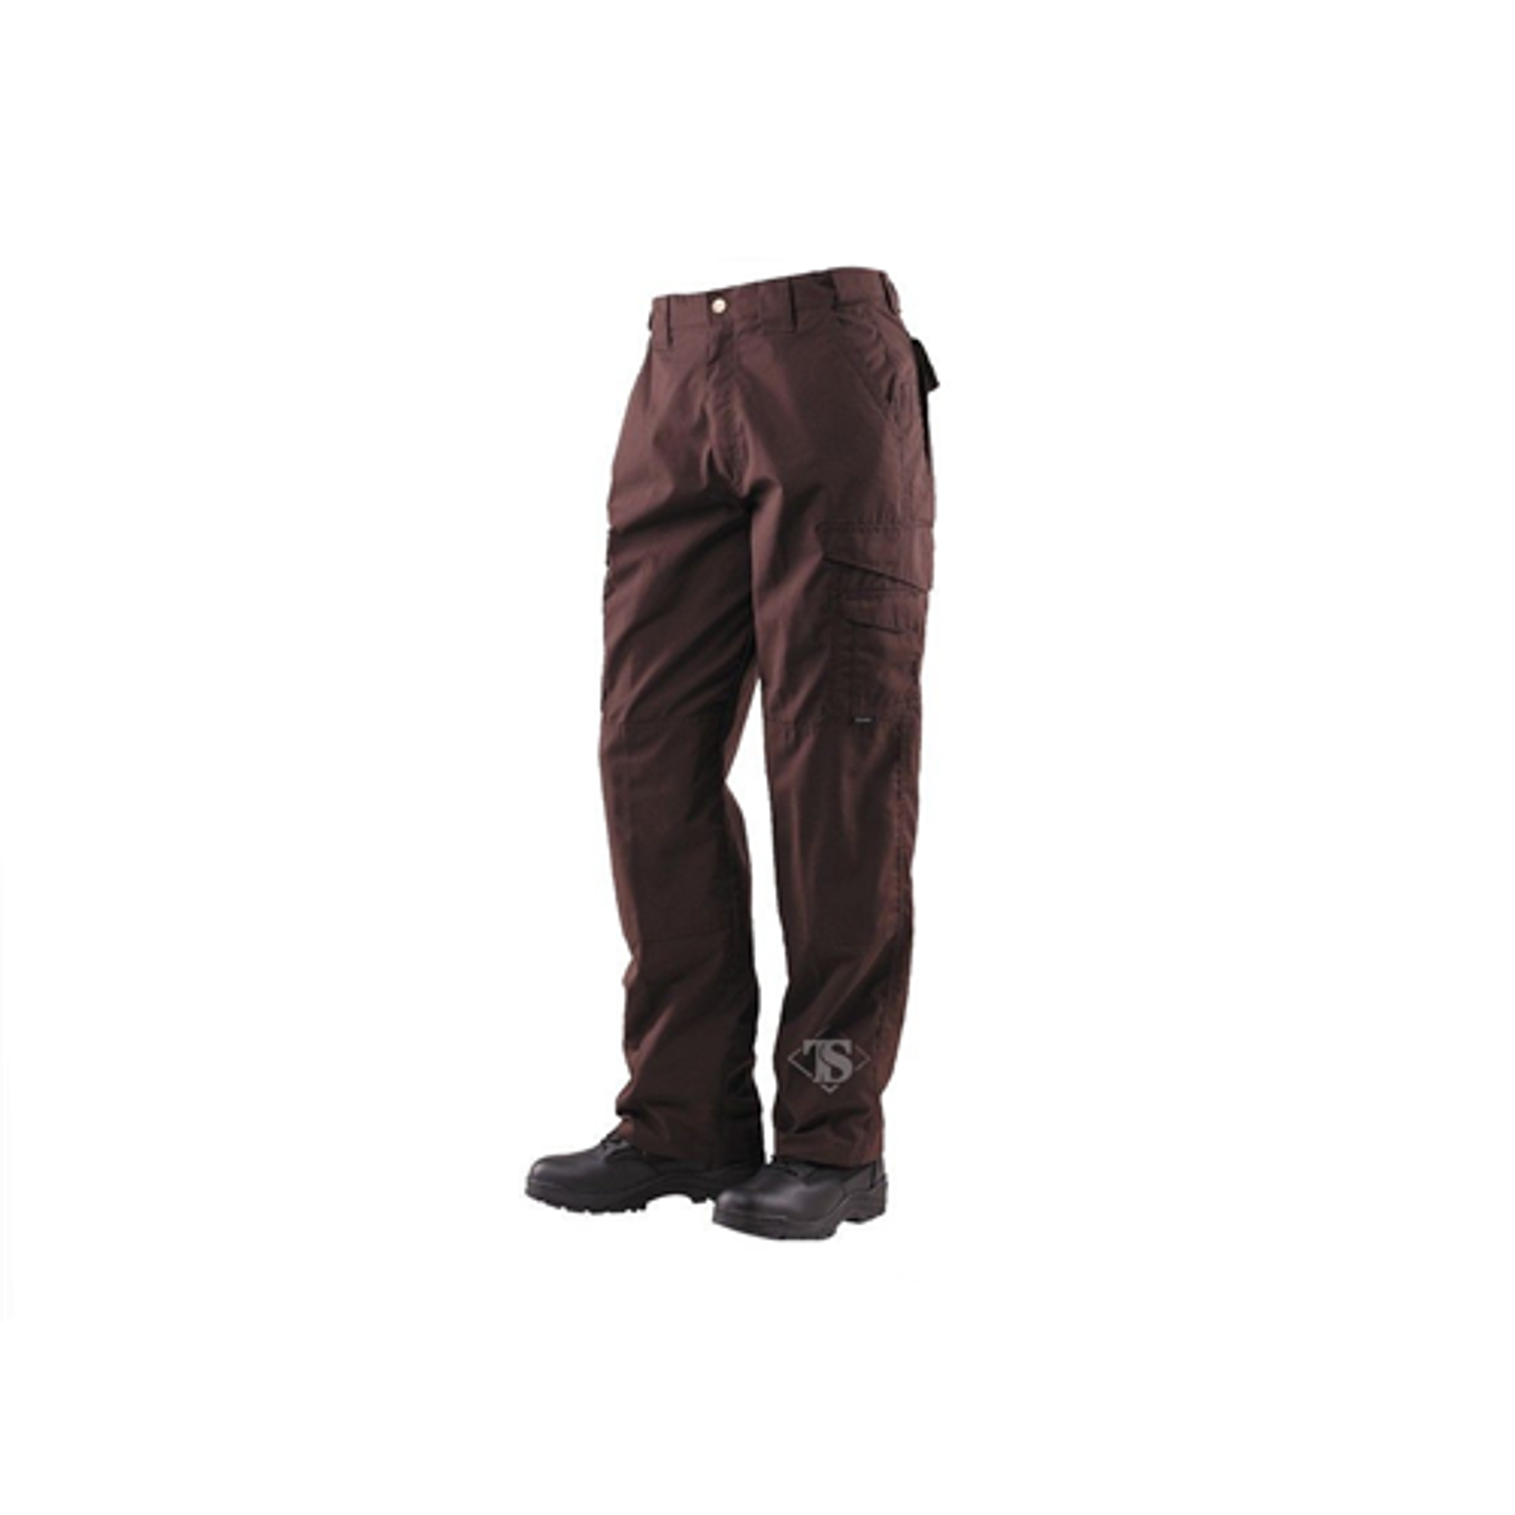 24-7 Original Tactical Pants - 6.5oz - Brown - KRTSP-1065006